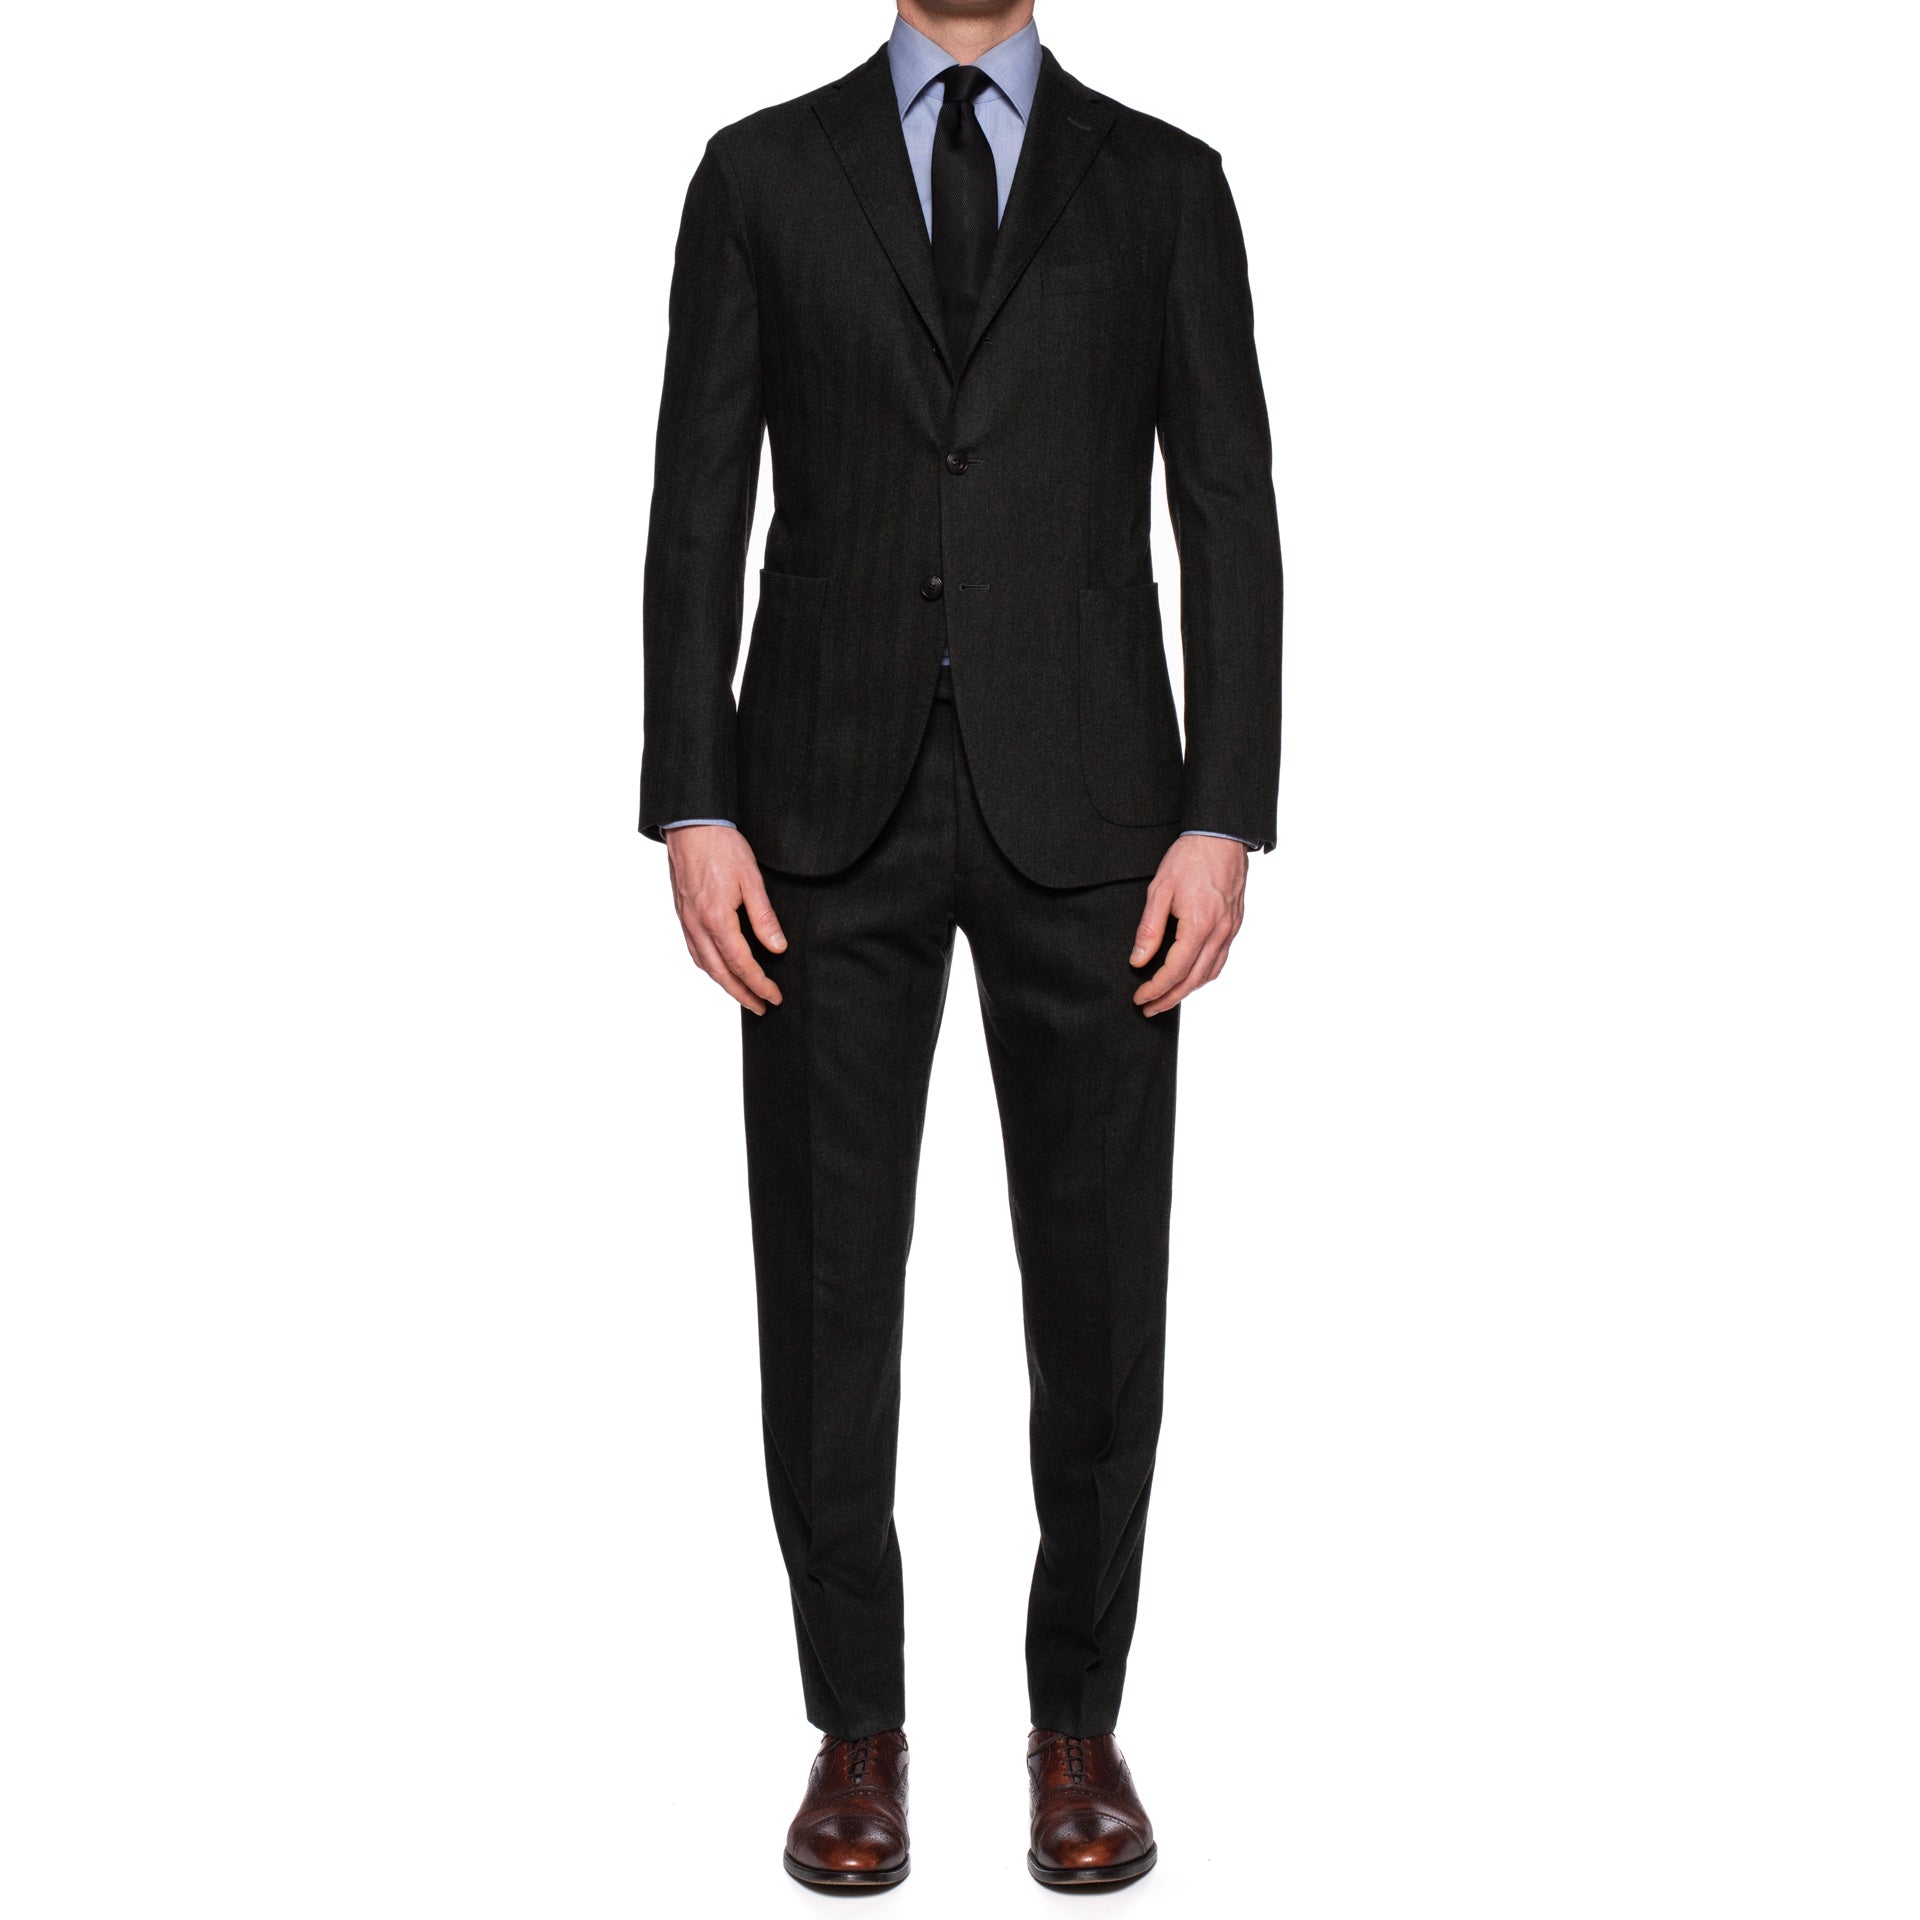 BOGLIOLI "K. Jacket" Olive Herringbone Wool Unlined Flannel Suit 50 NEW US 38 40 Slim